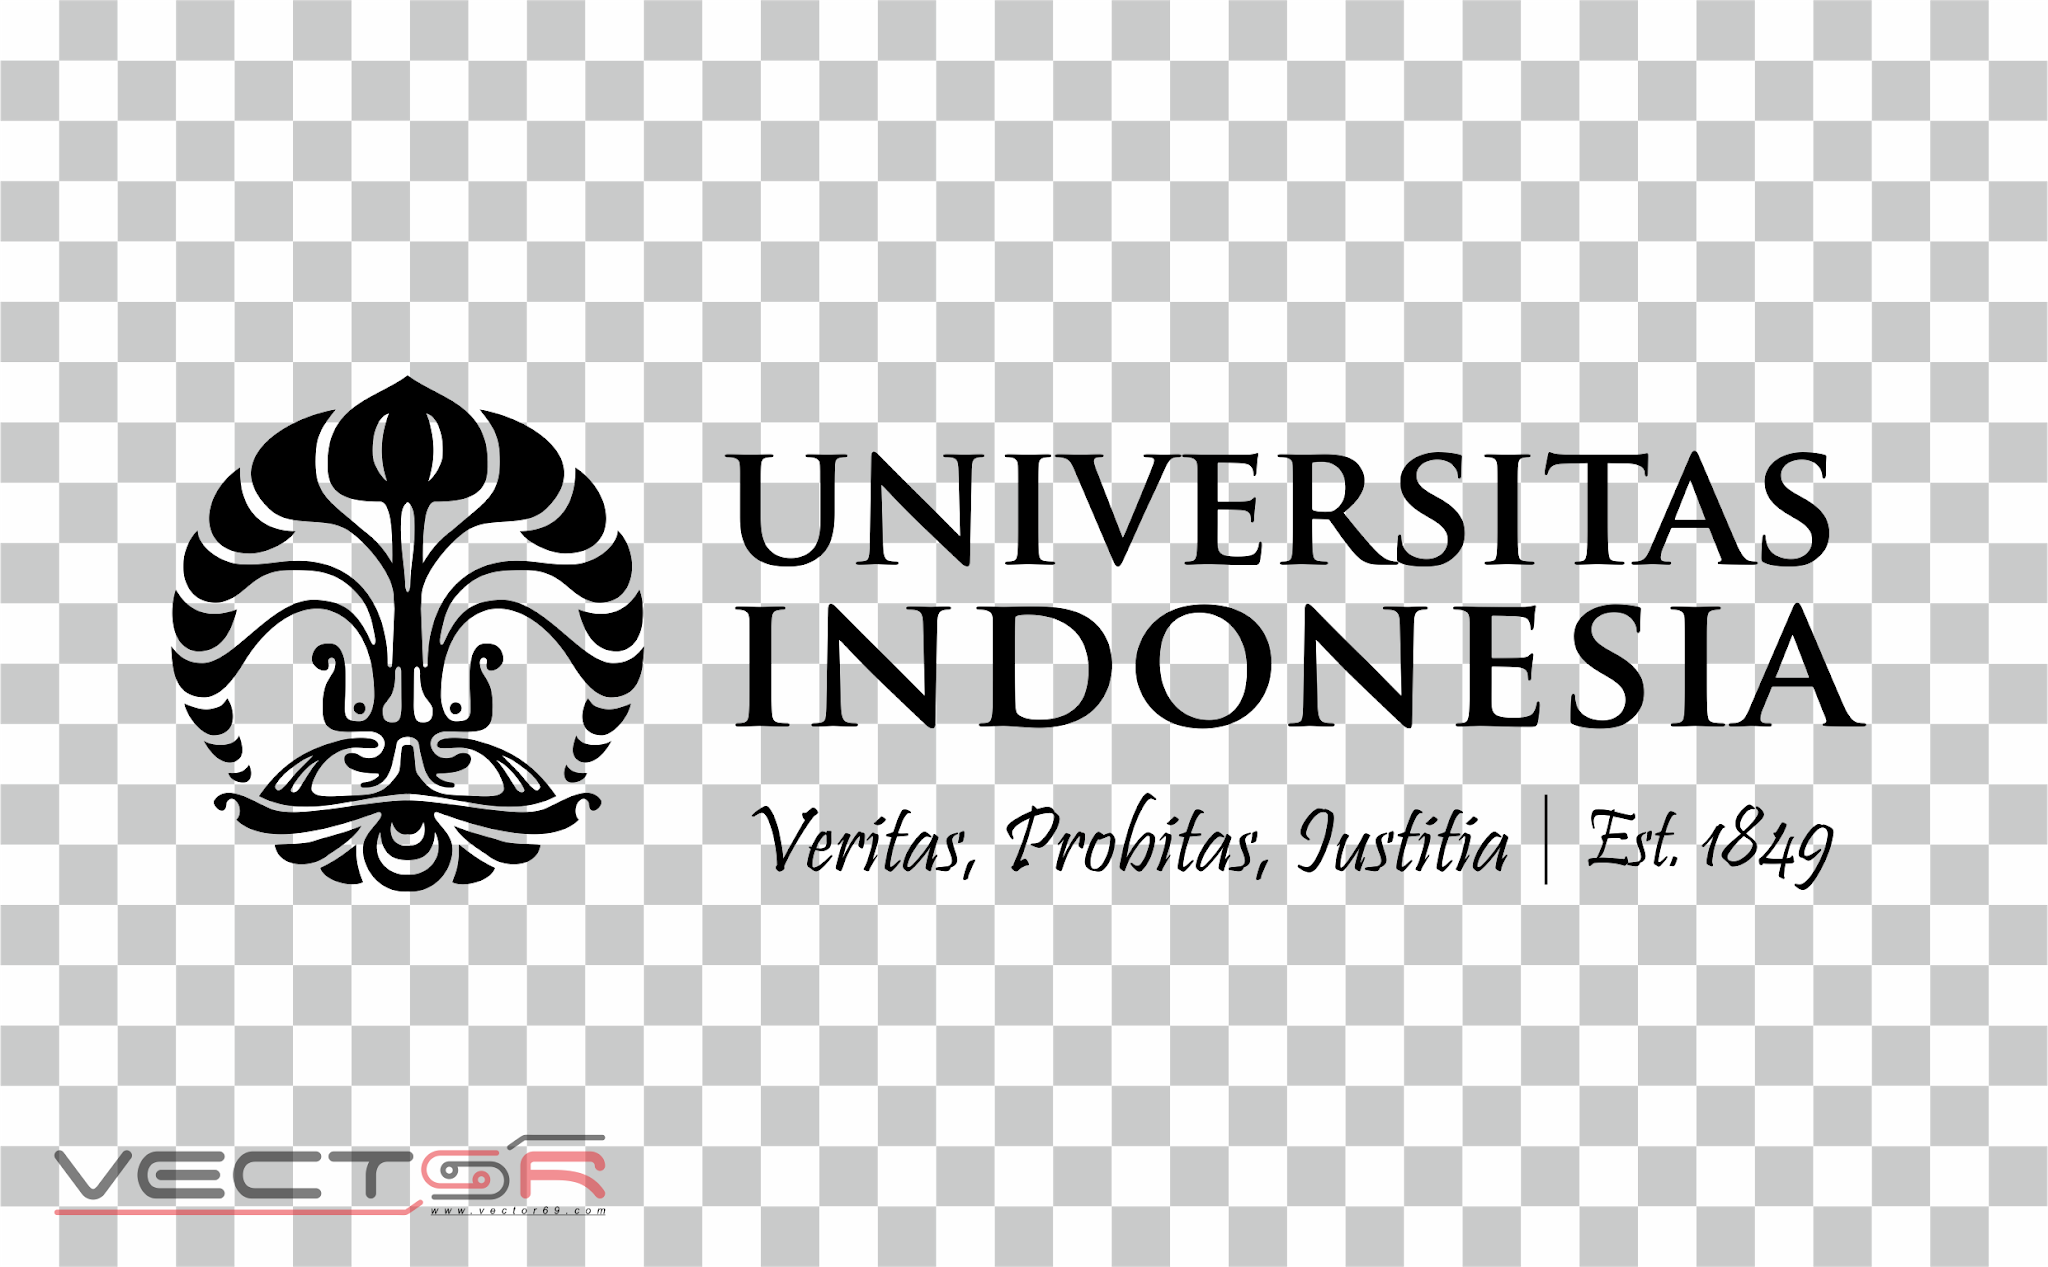 Logo UI (Universitas Indonesia) Landscape - Download .PNG (Portable Network Graphics) Transparent Images